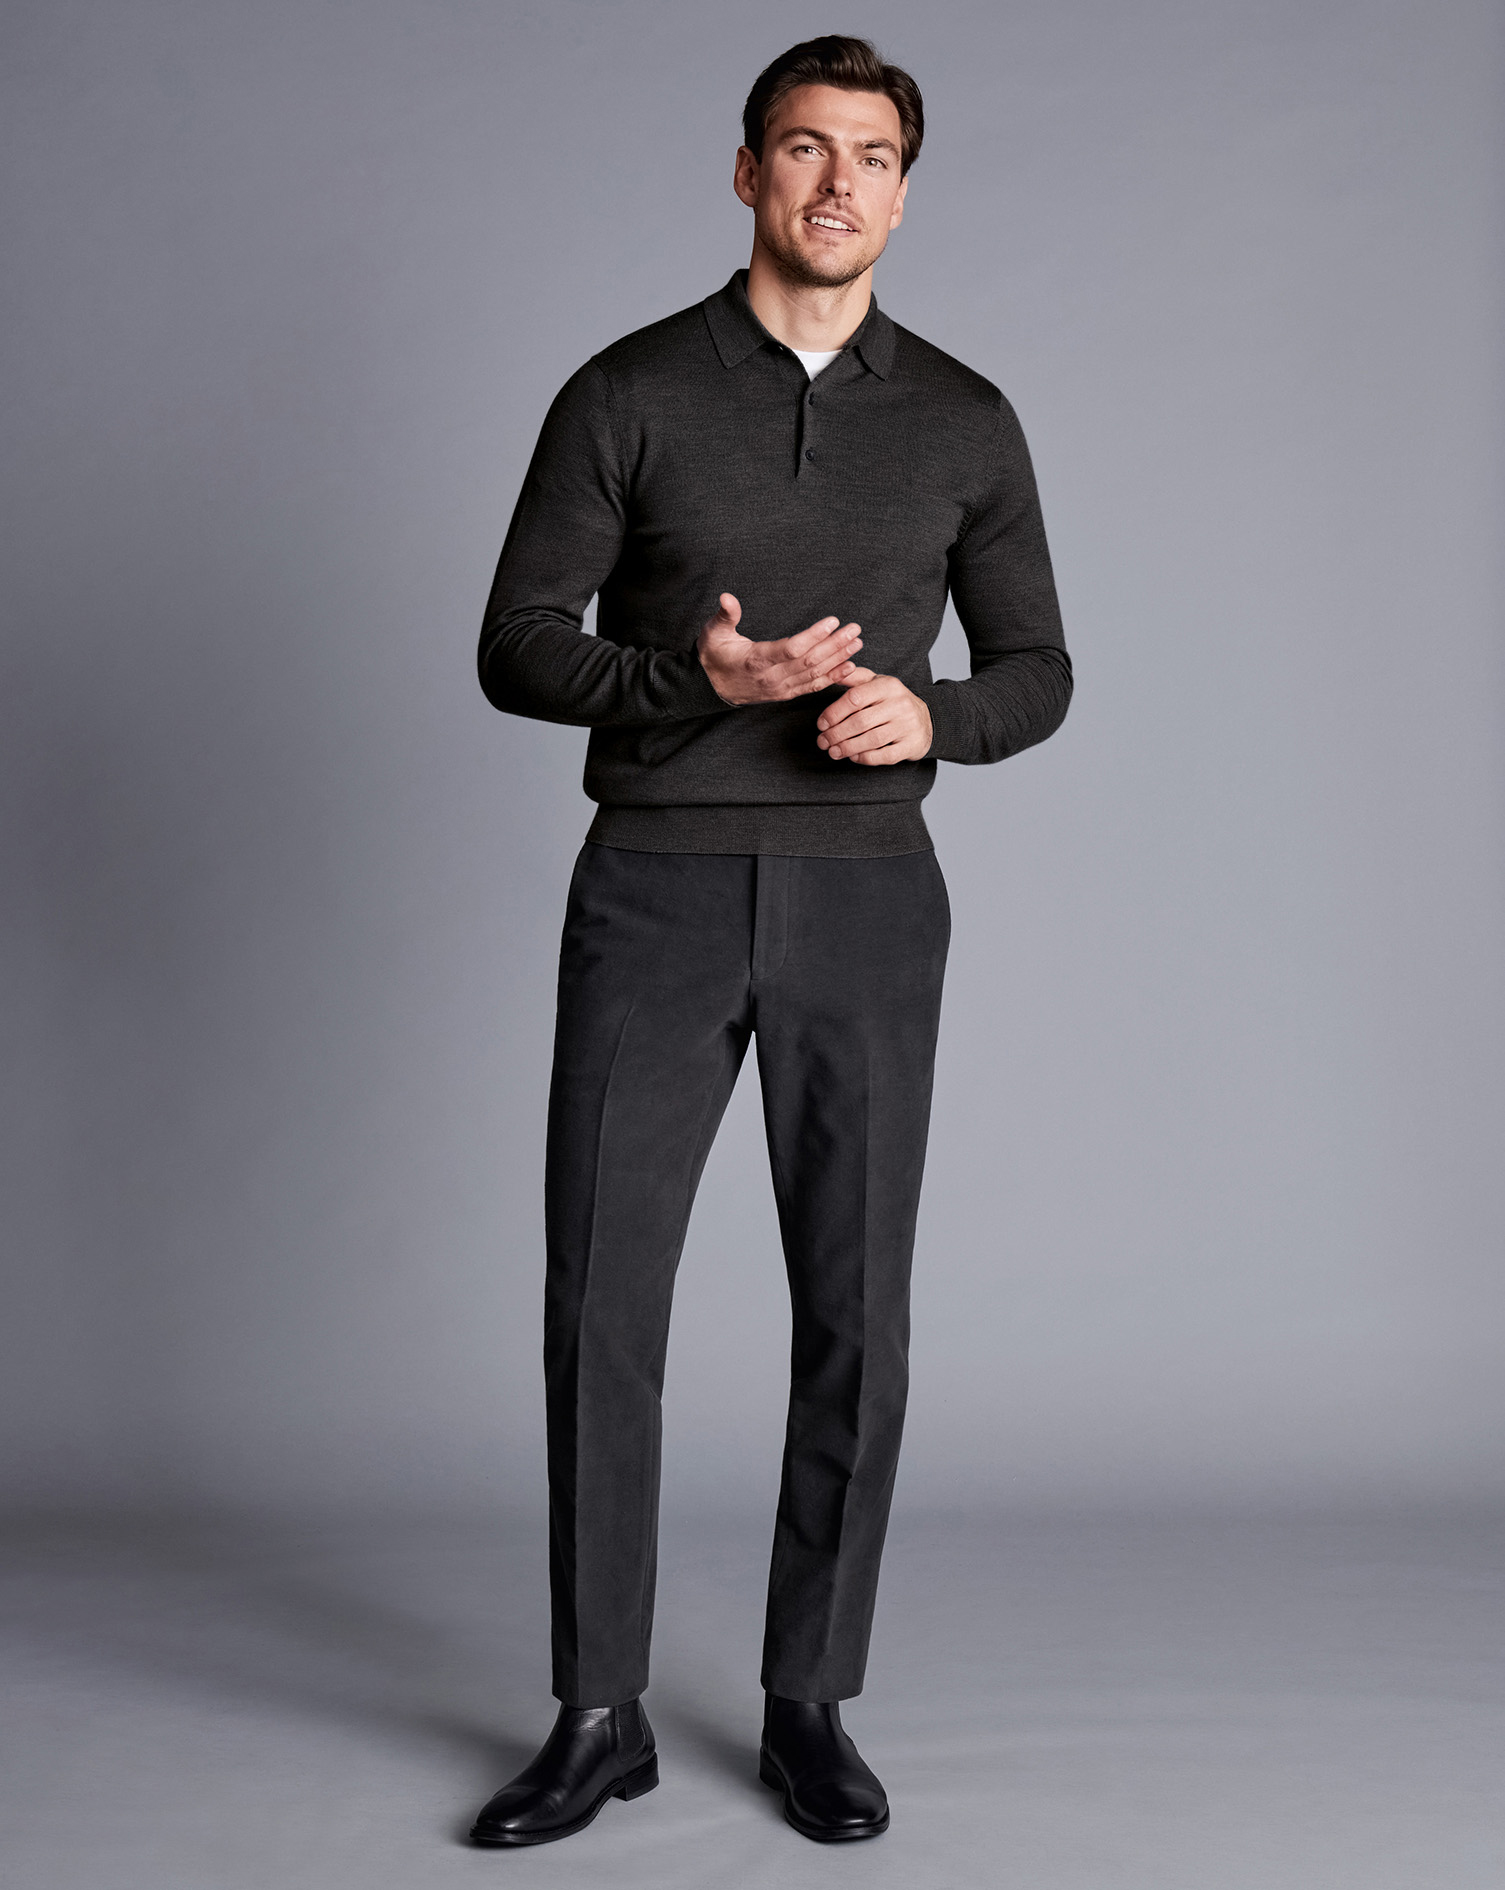 Wampum Men's regular fit moleskin trousers: for sale at 39.99€ on  Mecshopping.it